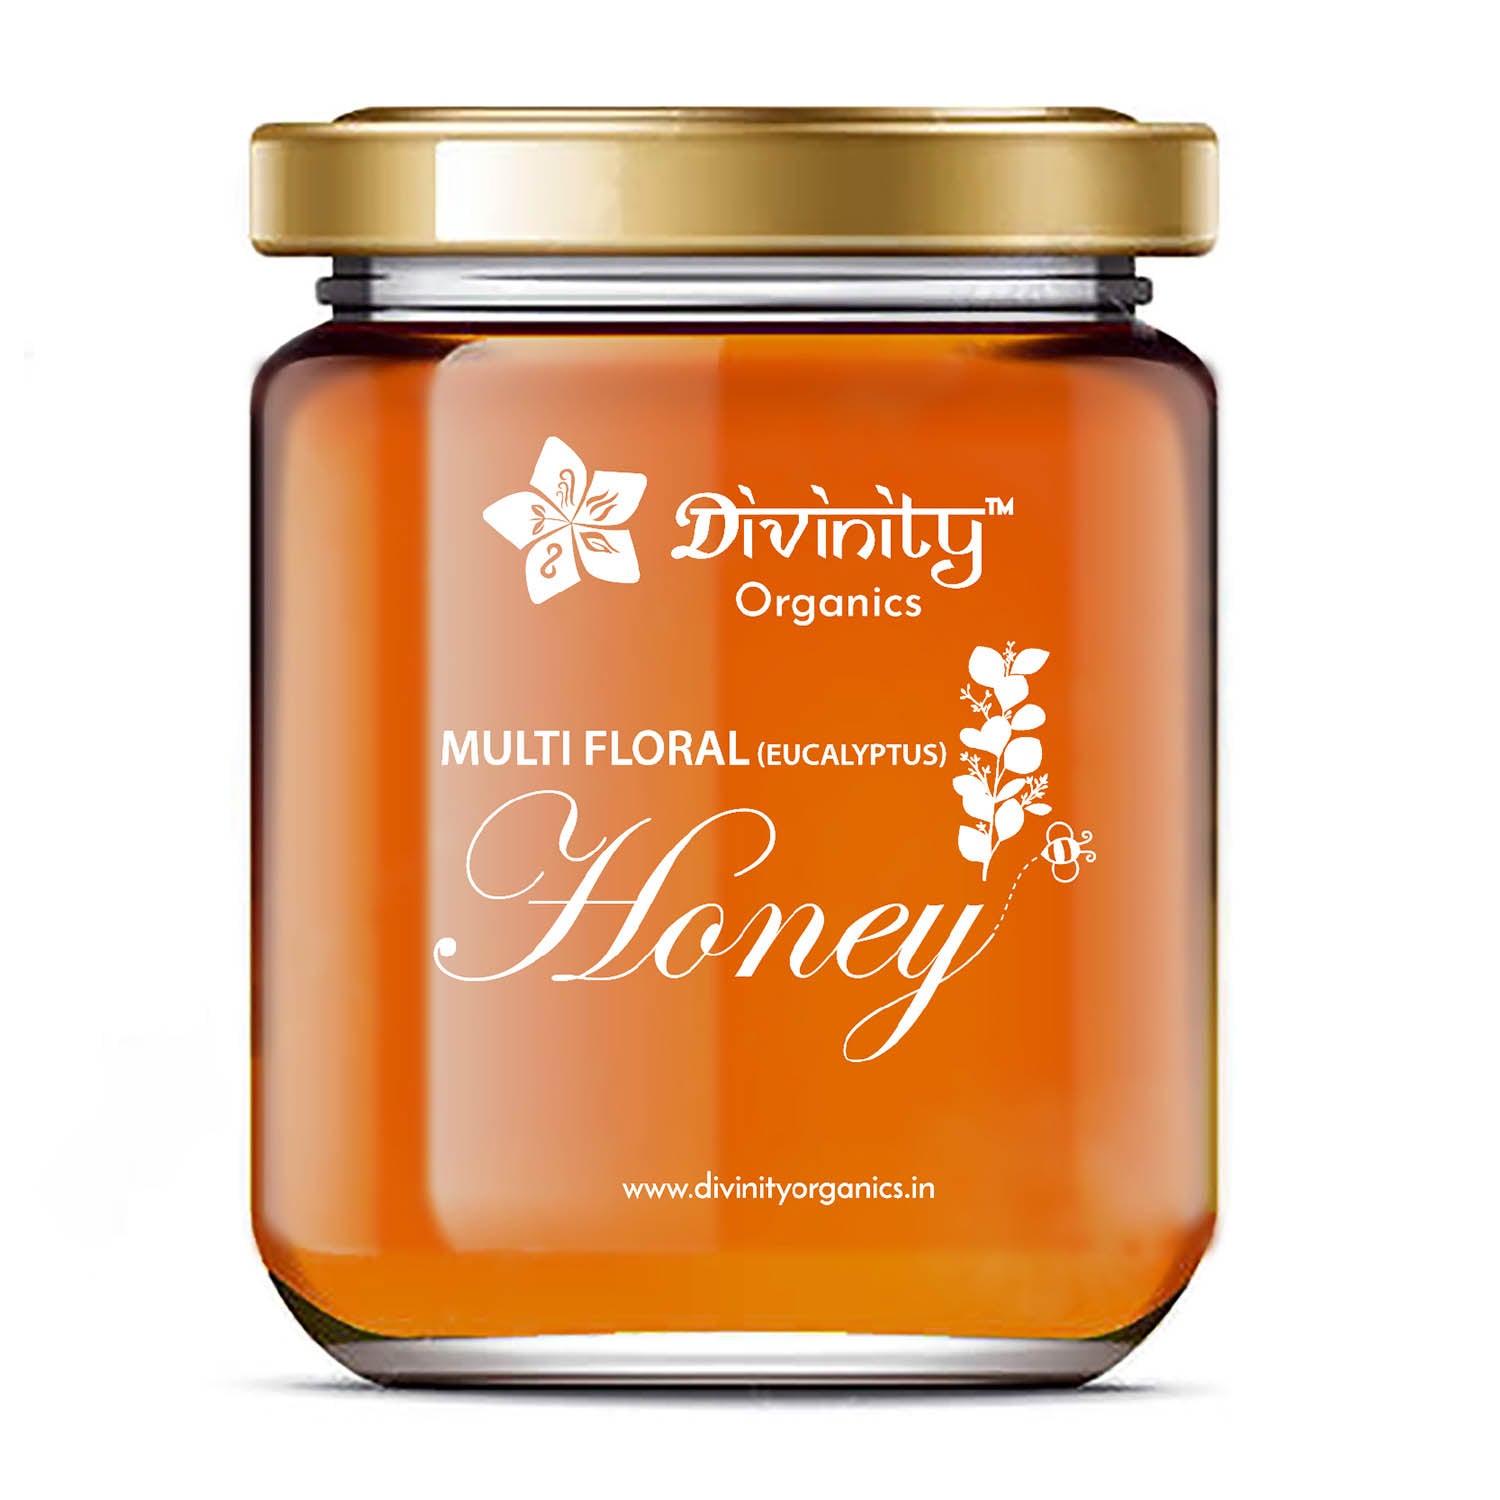 Multi-floral honey (Eucalyptus)